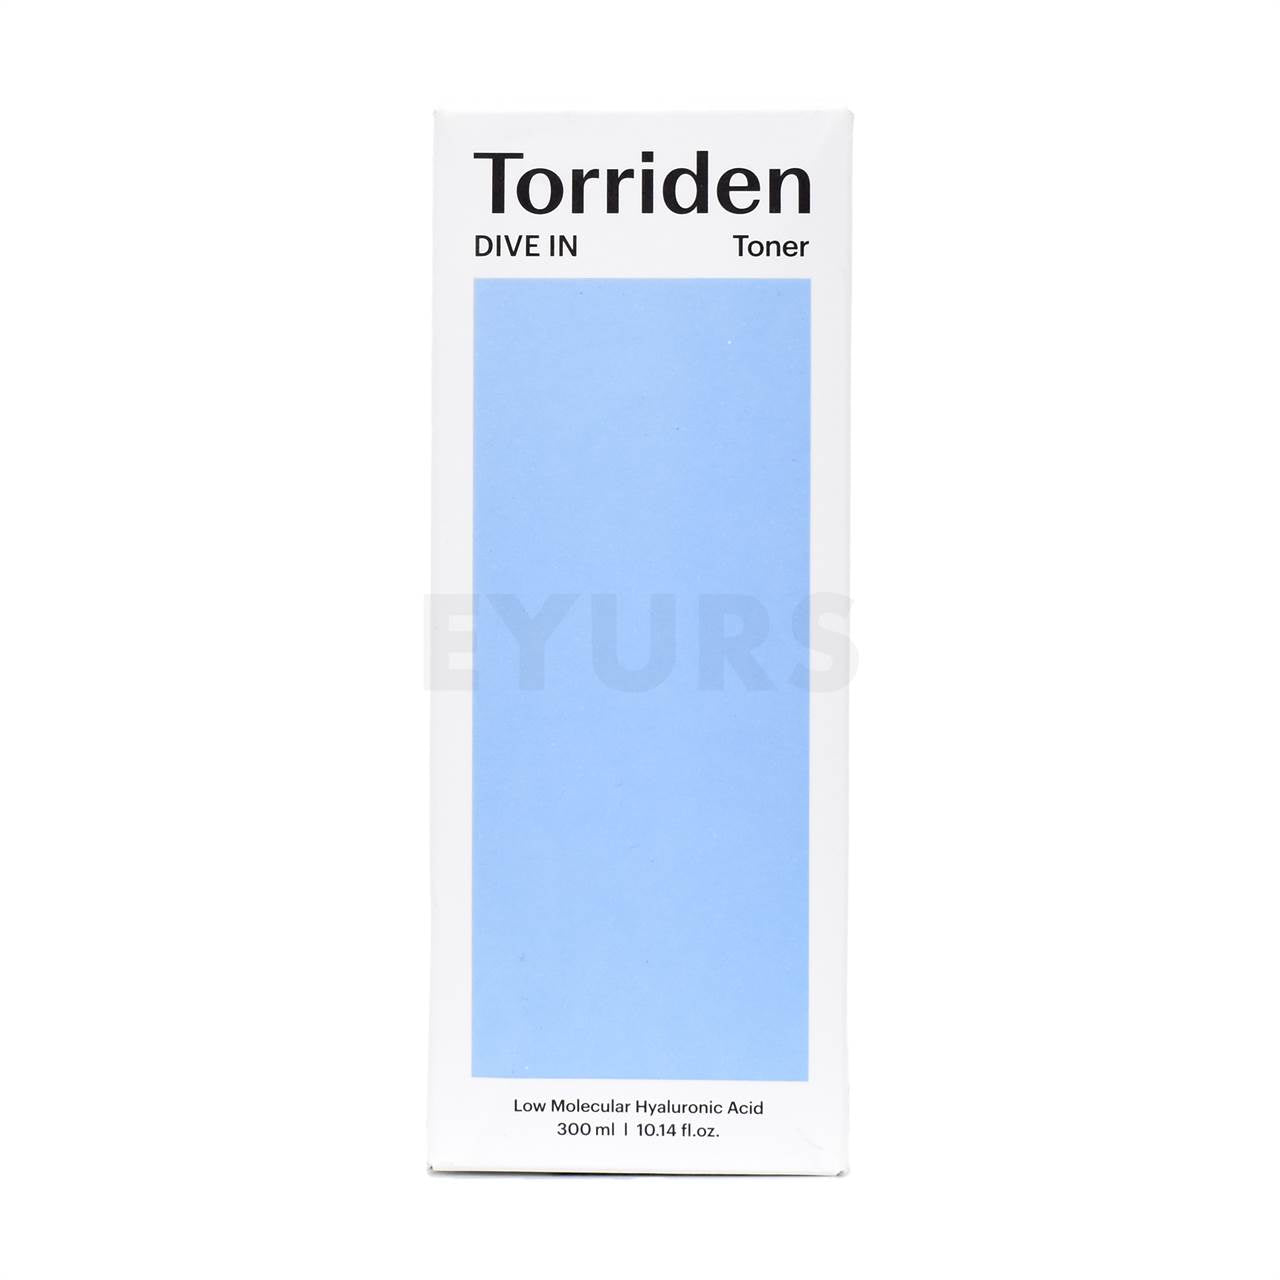 torriden dive in low molecule hyaluronic acid toner 300ml front side packaging